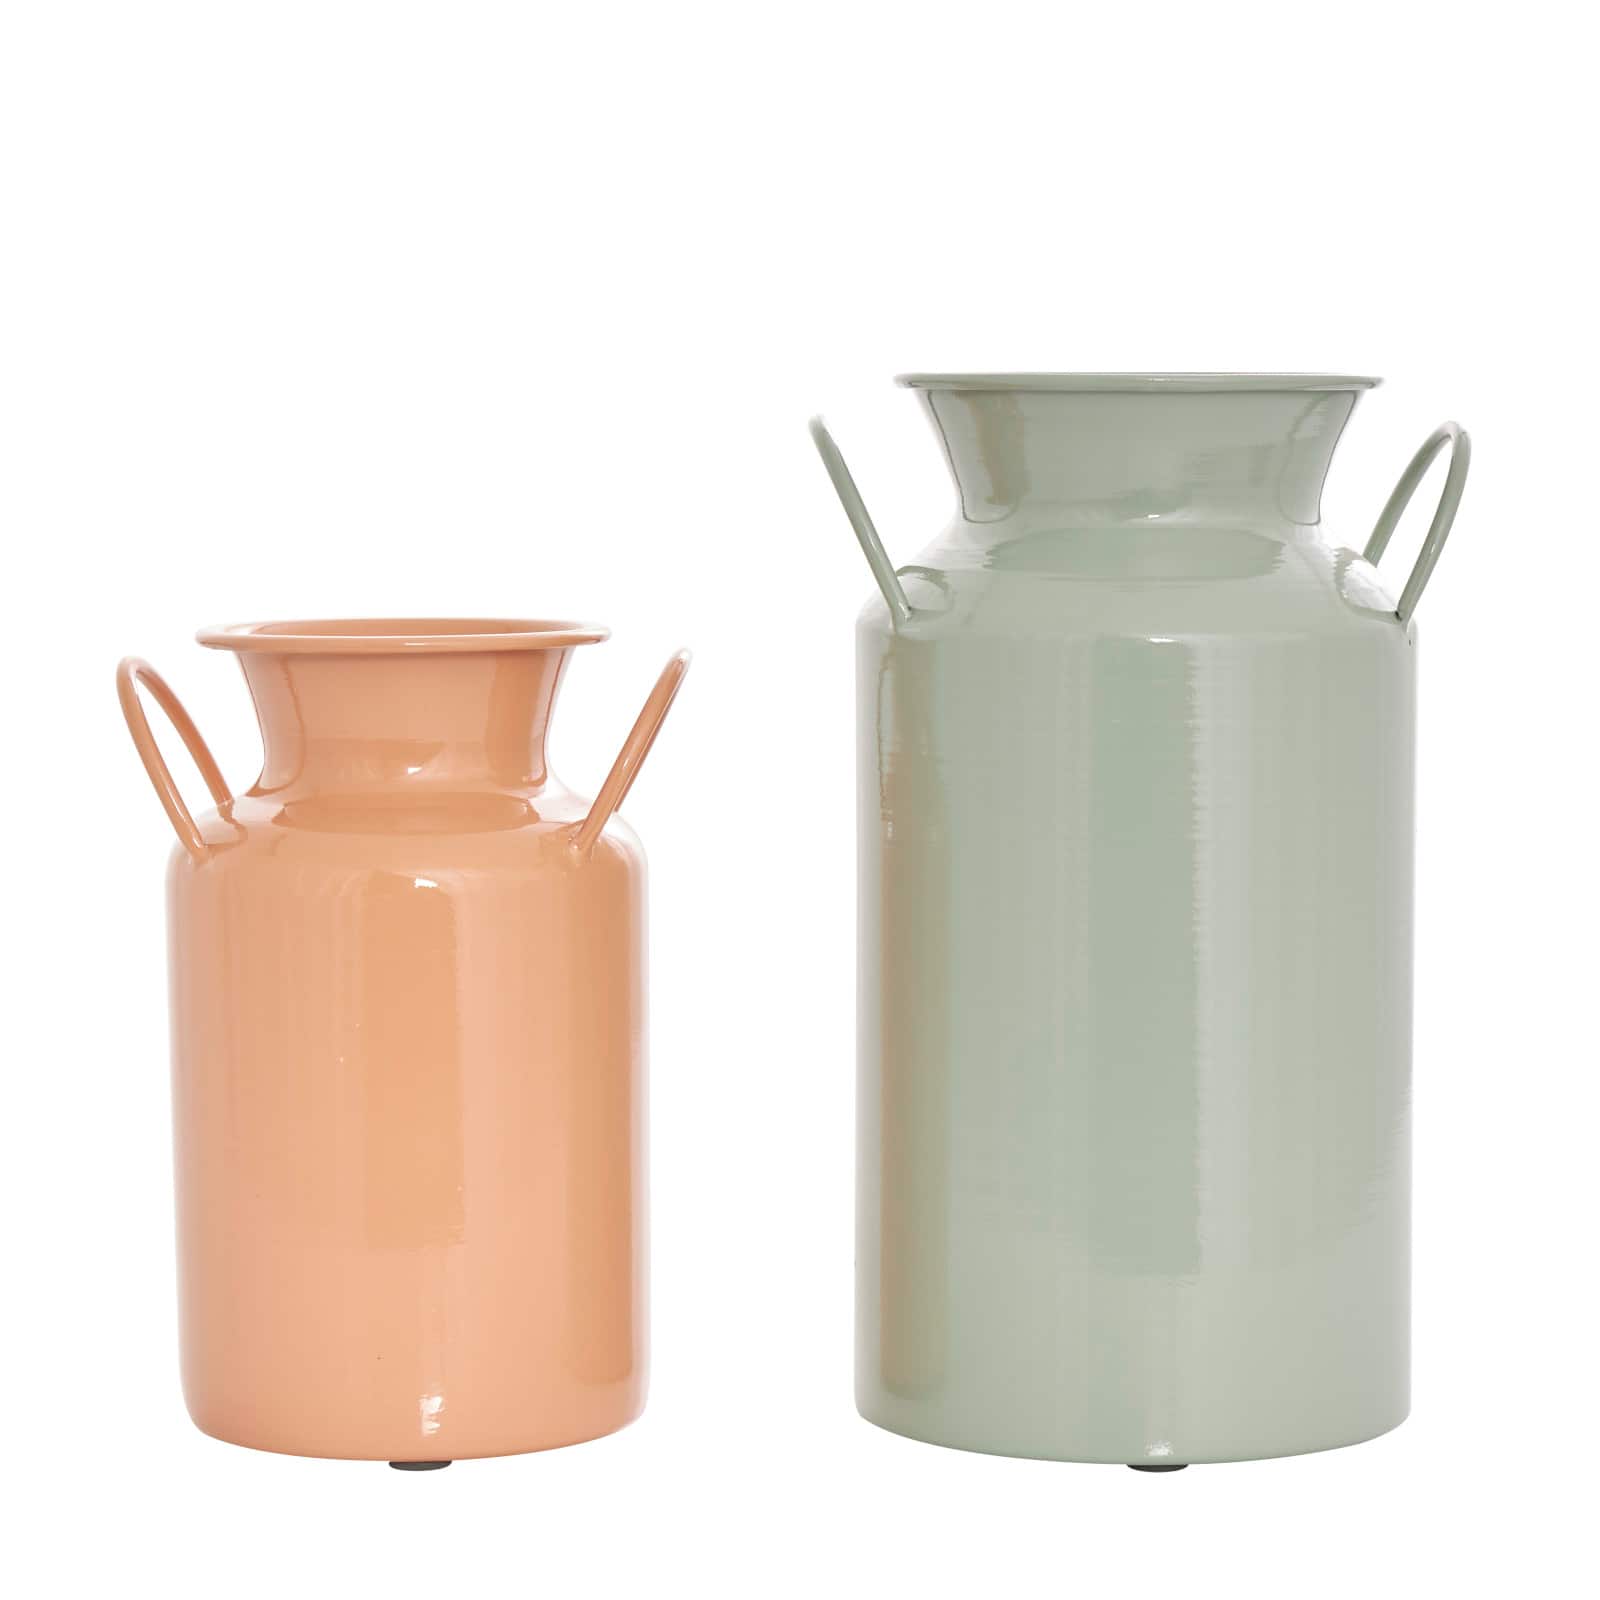 Multicolored Metal Jug Vase with Handles Set